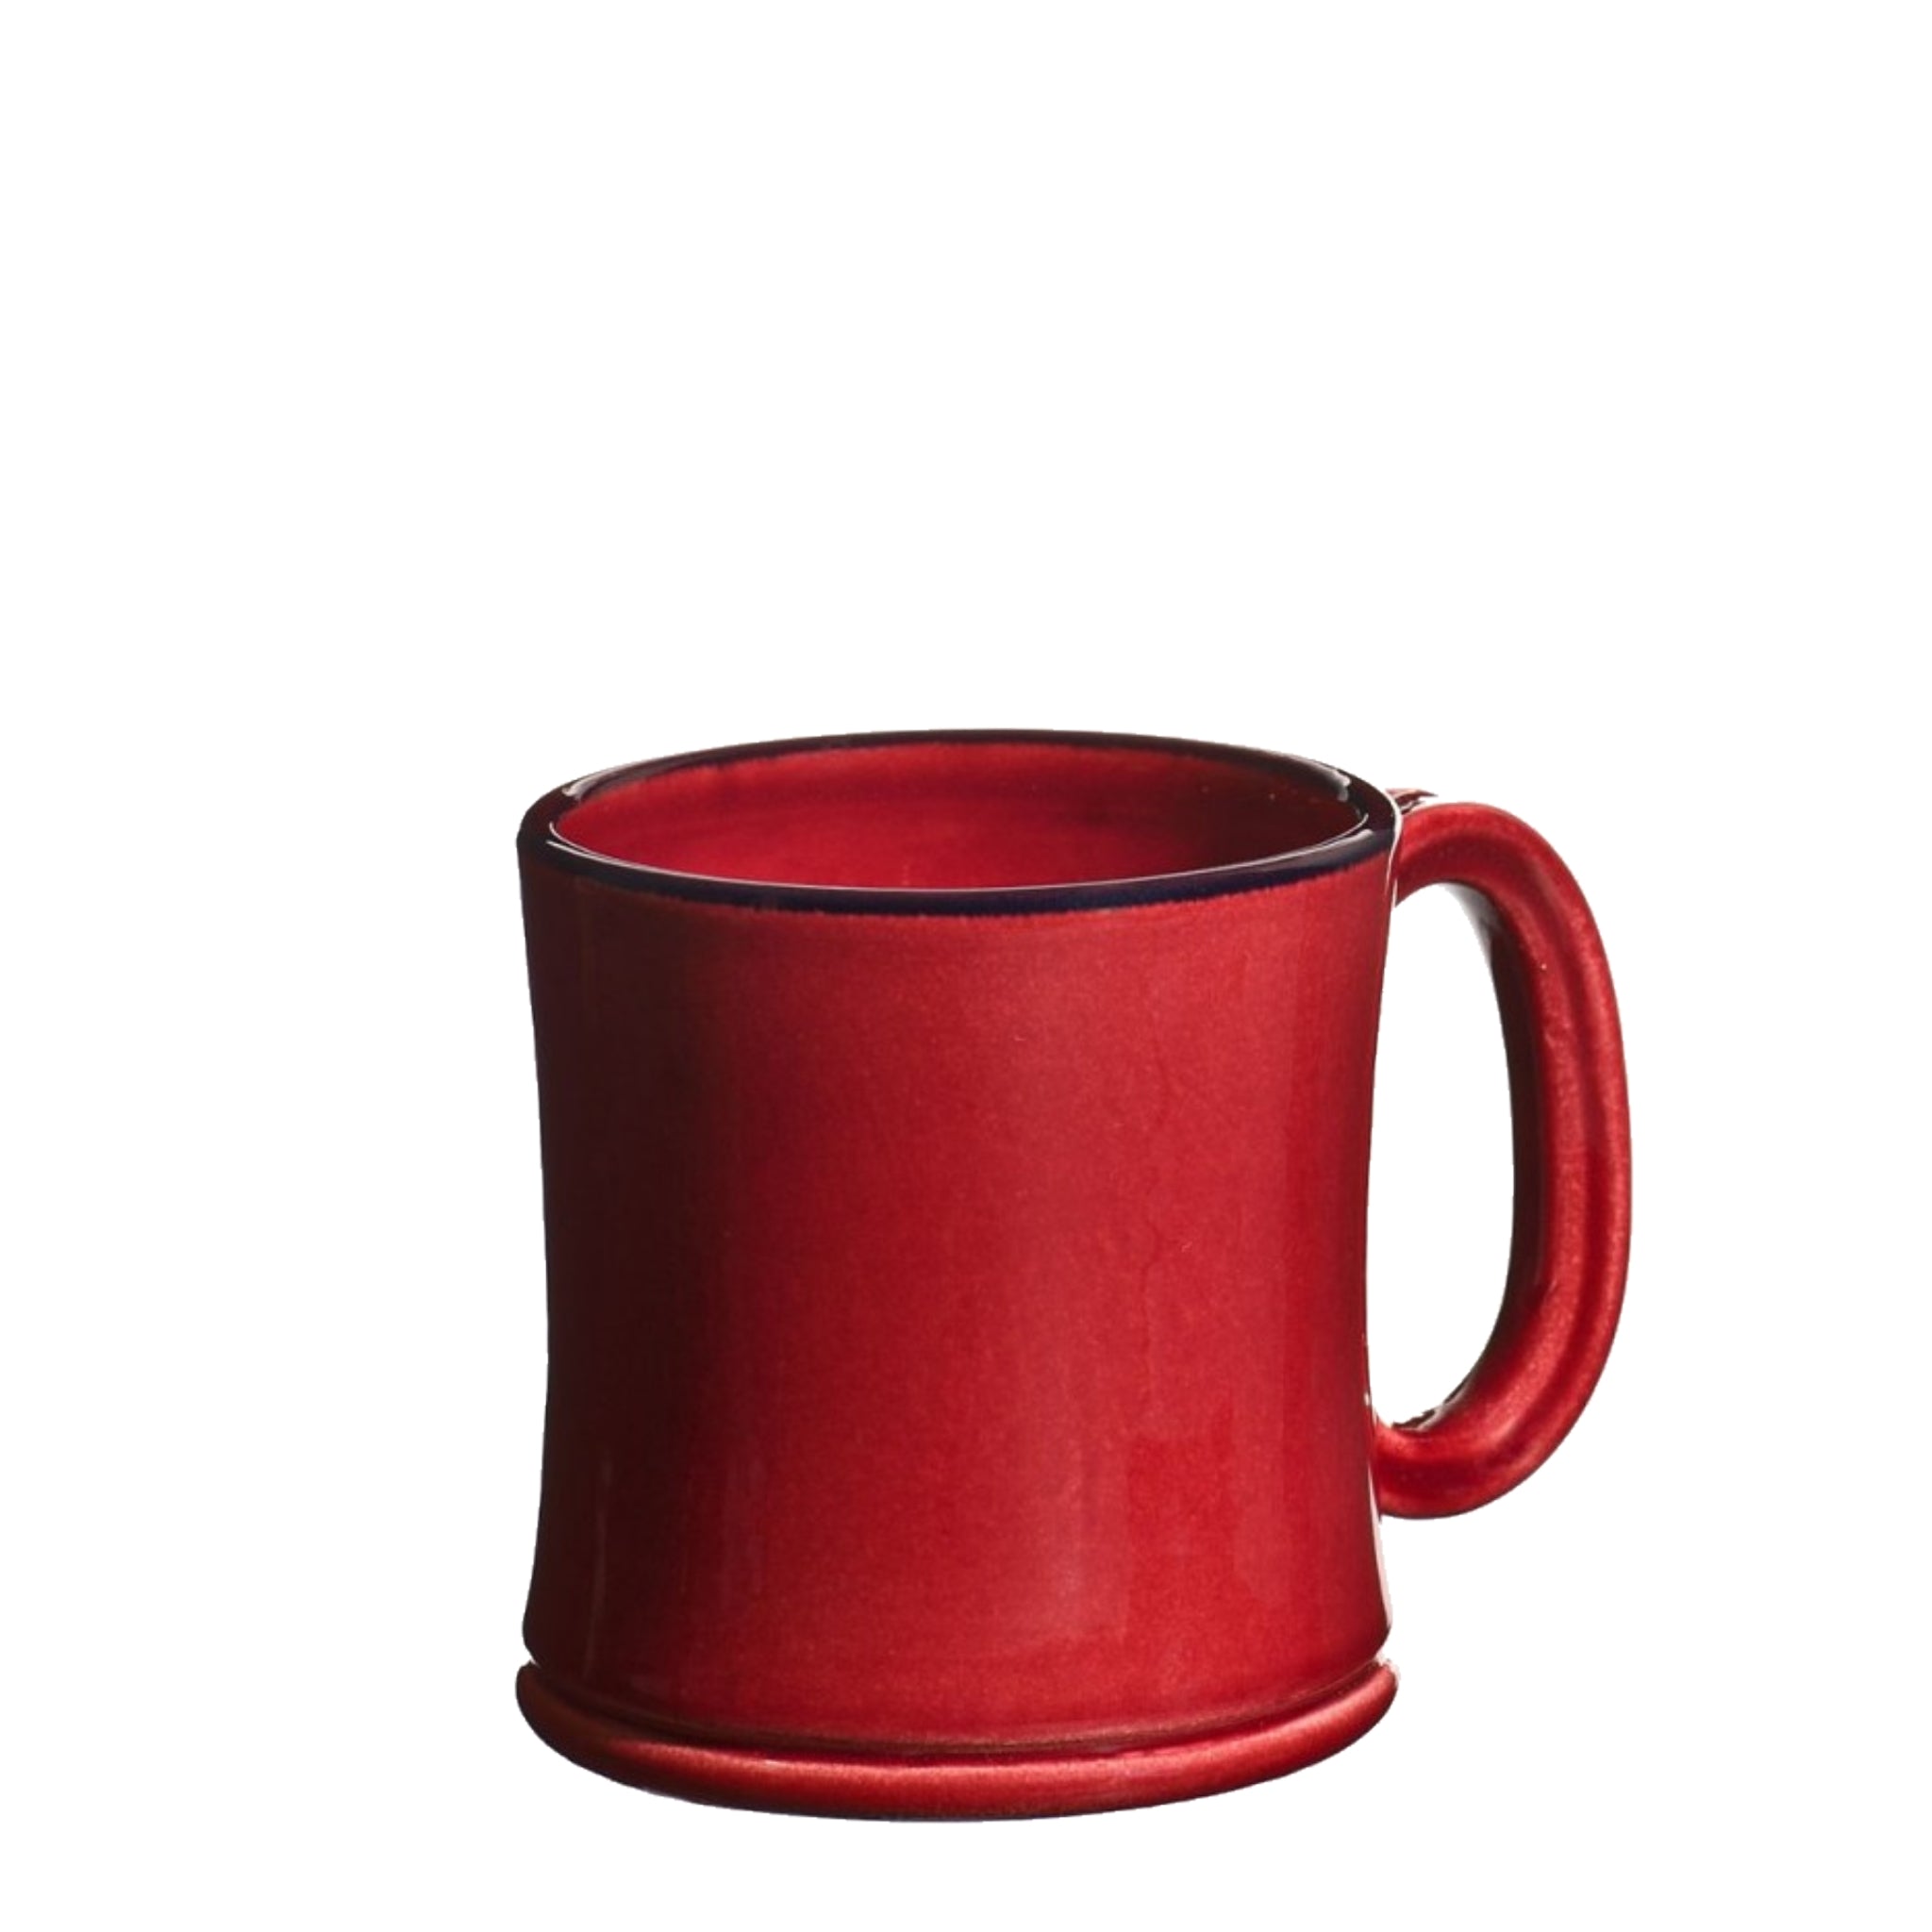 Håndlavet keramikkrus i farven rød fra Atelier Bernex, Oliviers & Co